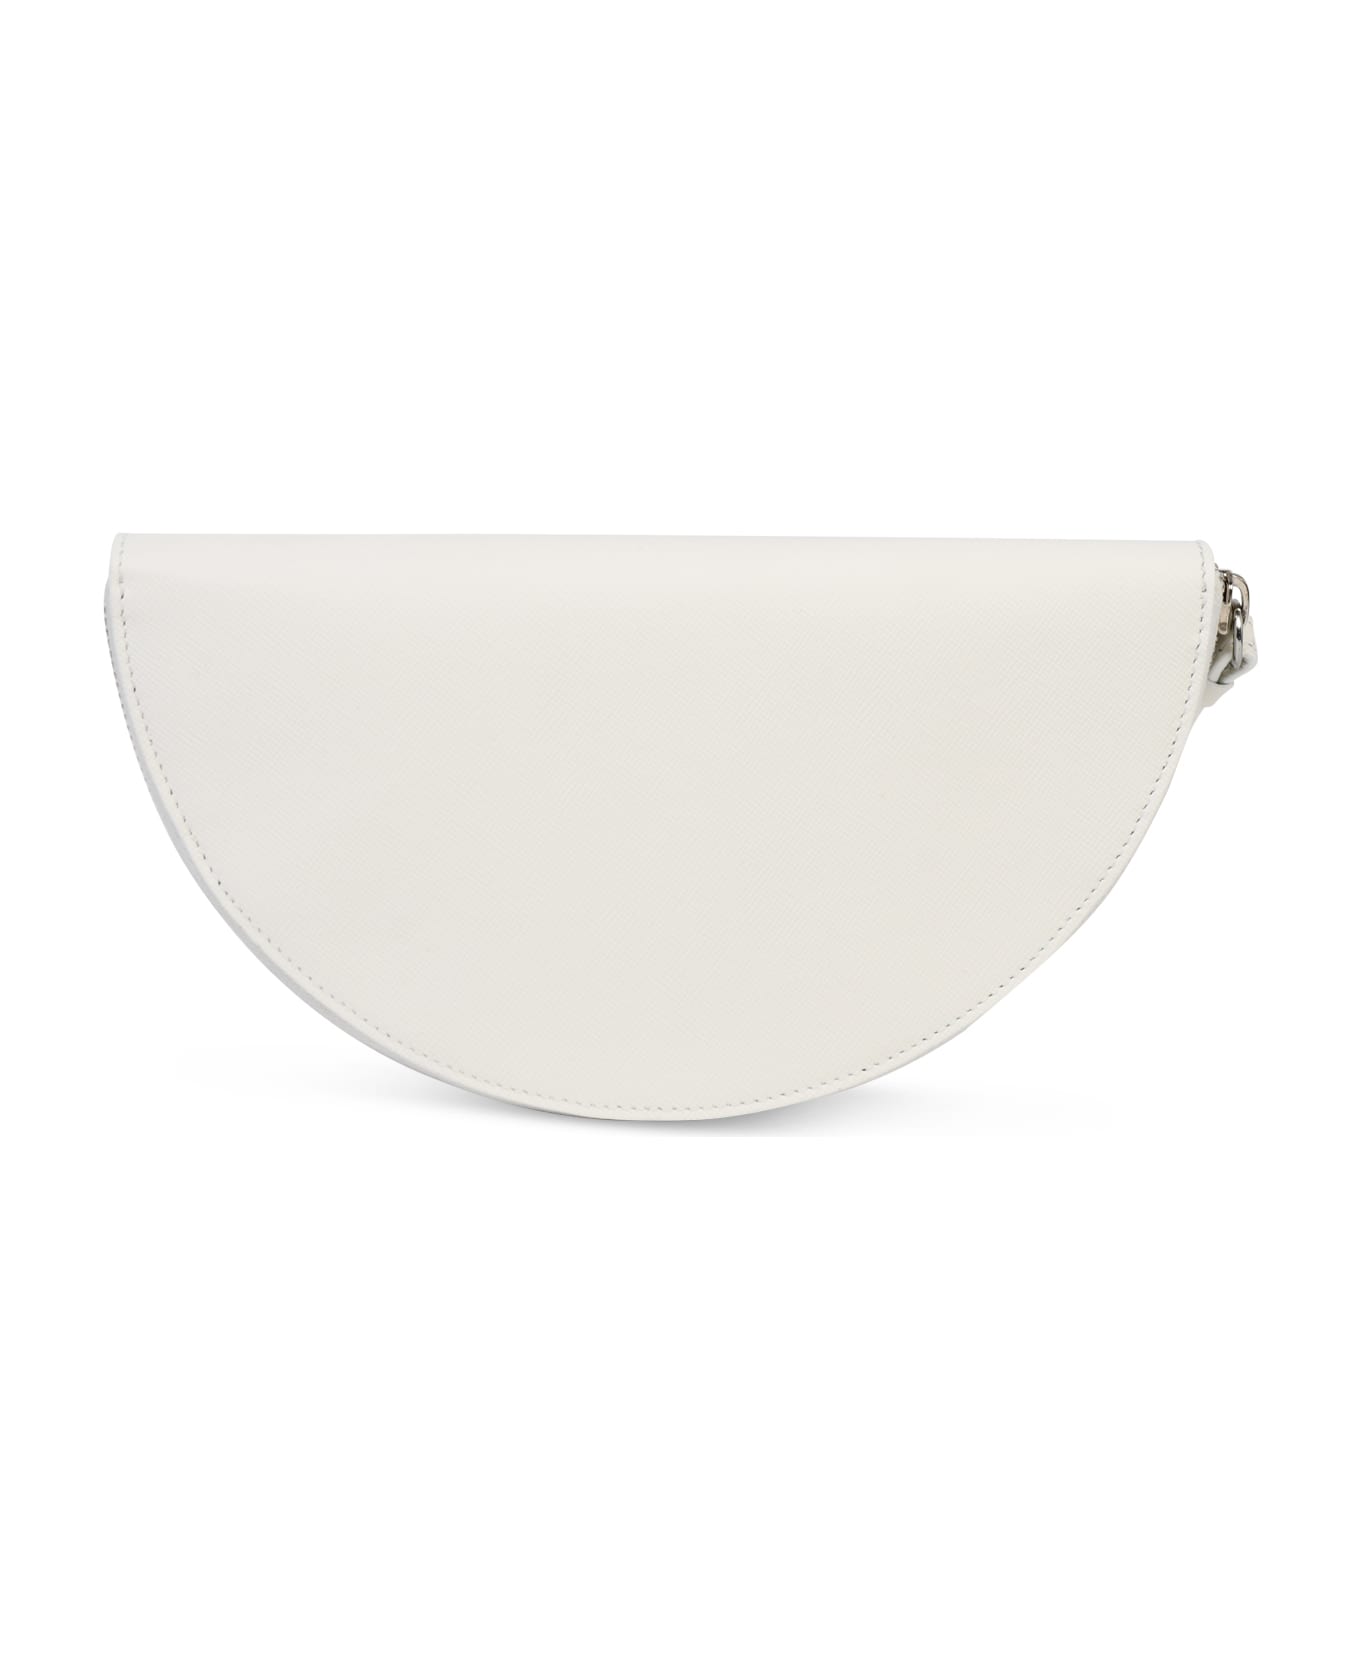 Maison Margiela White Saffiano Leather Clutch Bag - White